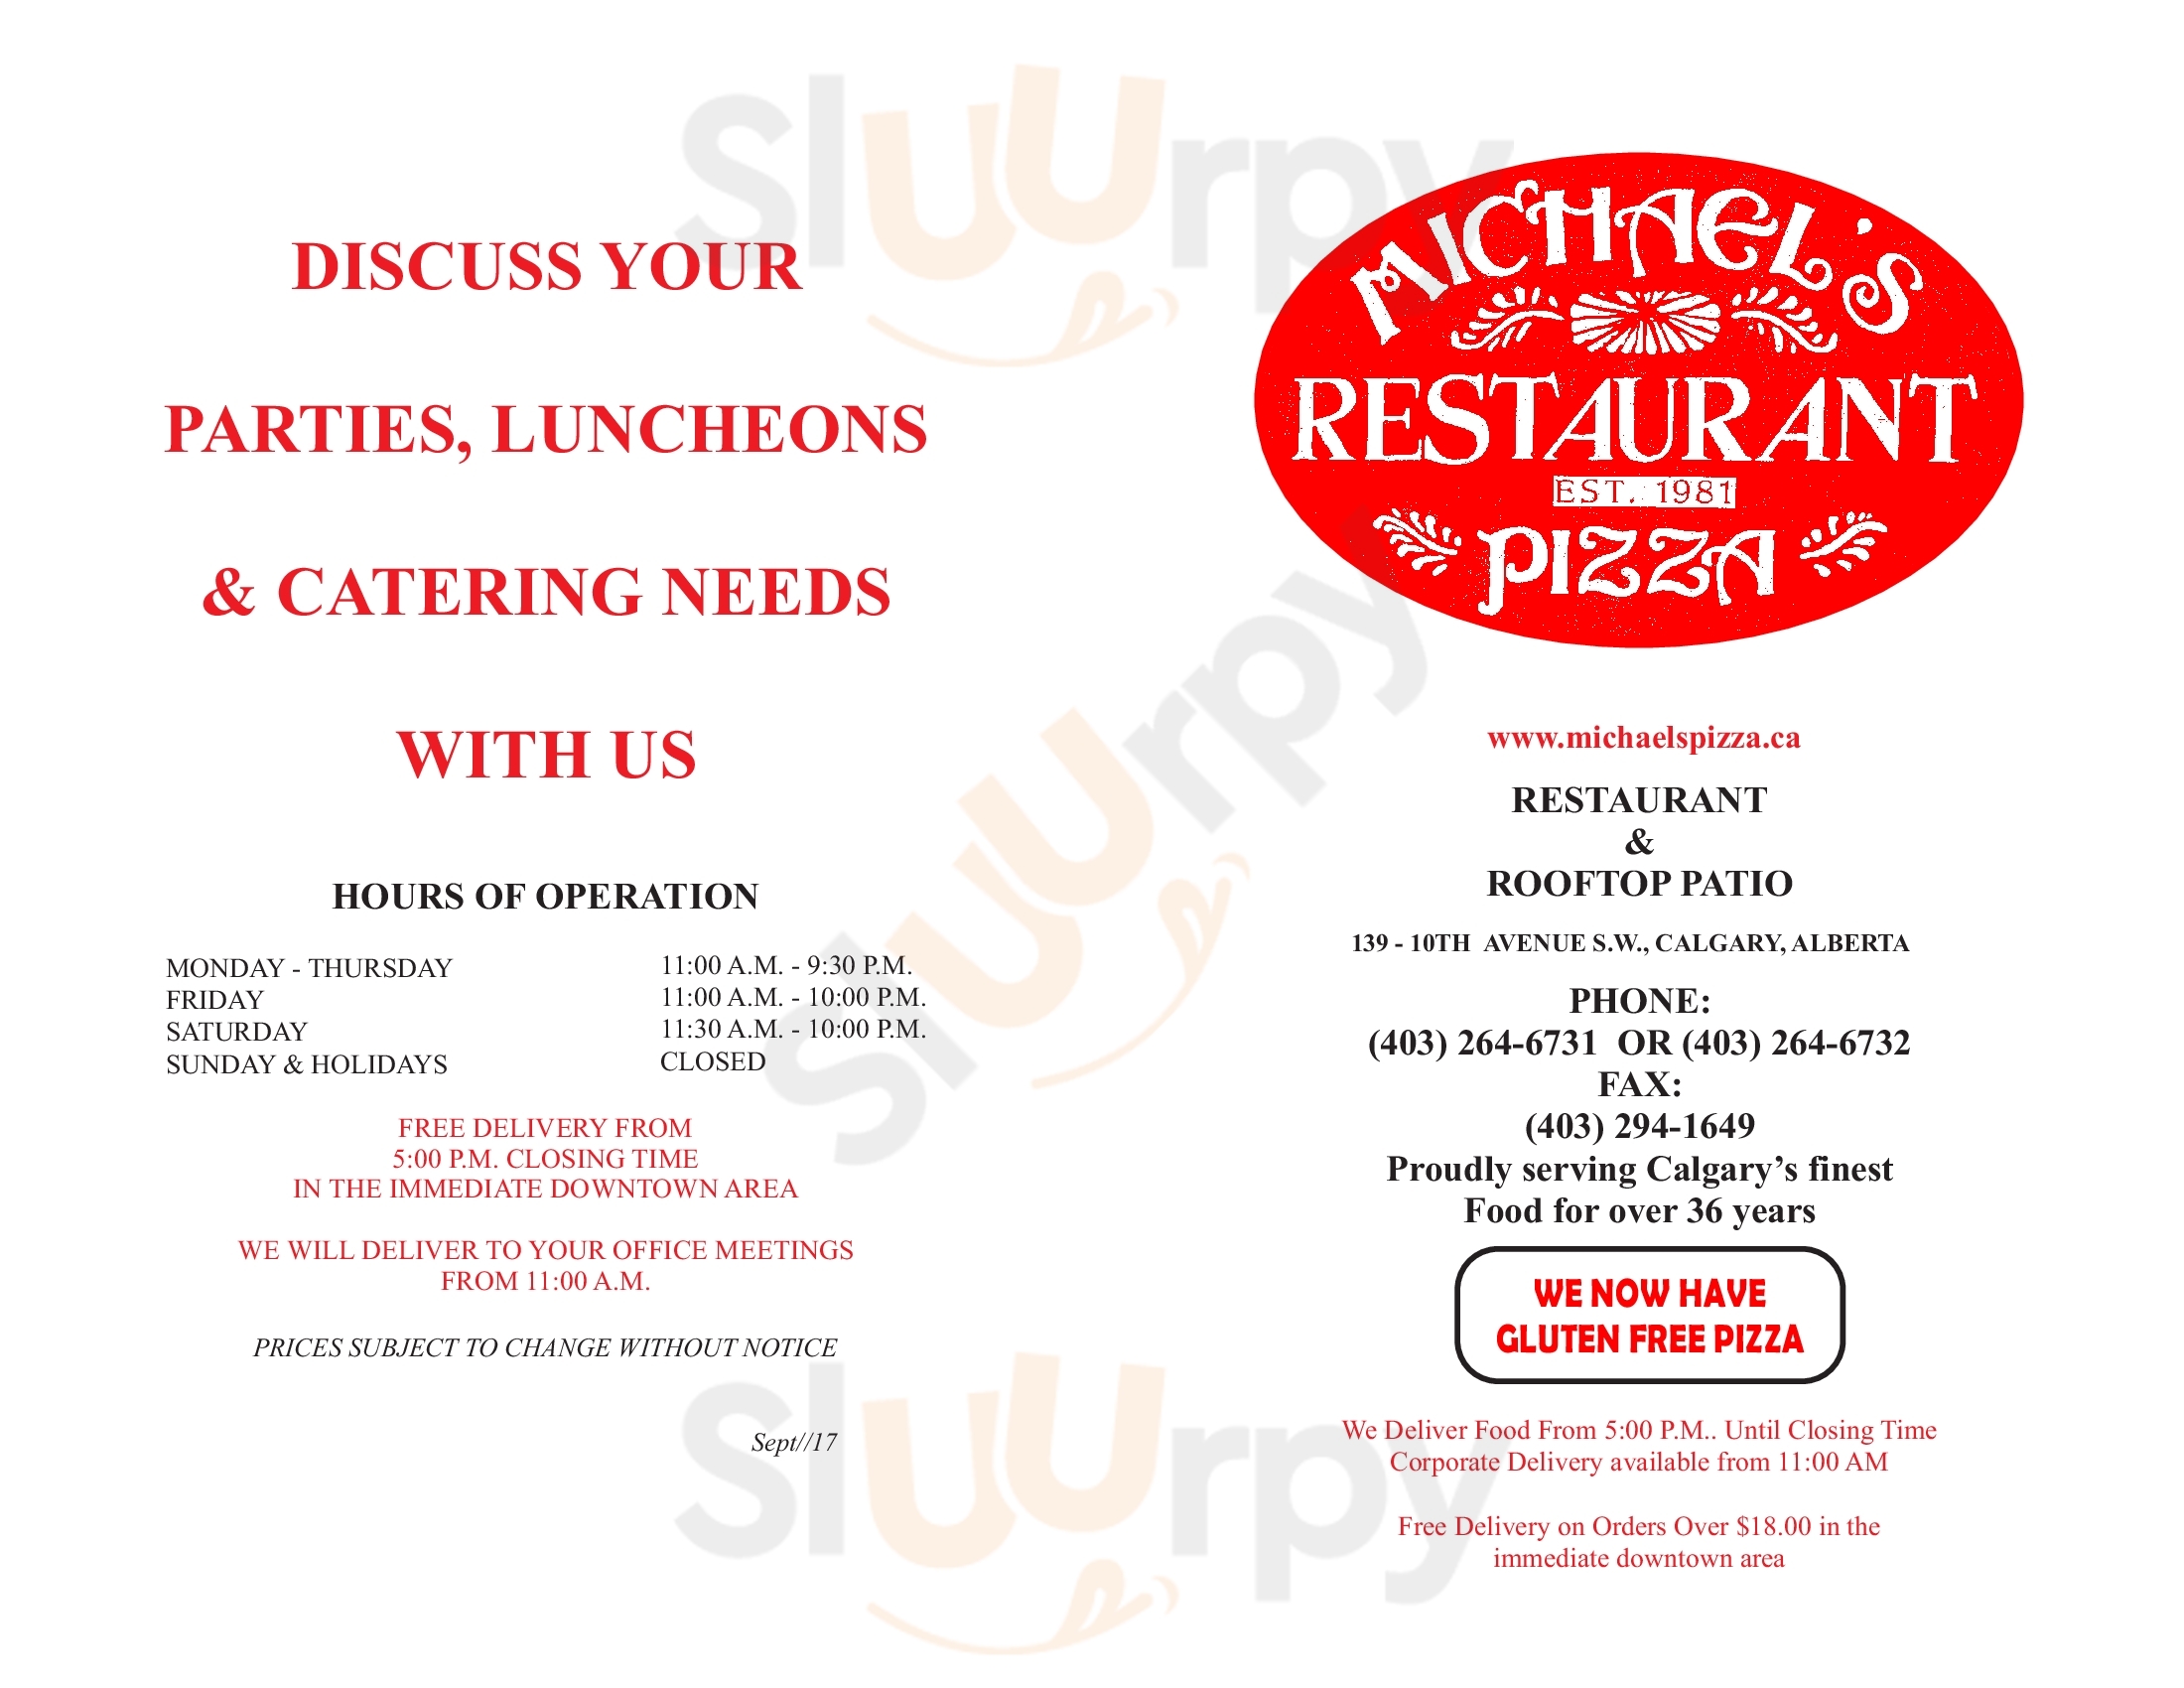 Michael's Restaurant & Pizza Calgary Menu - 1